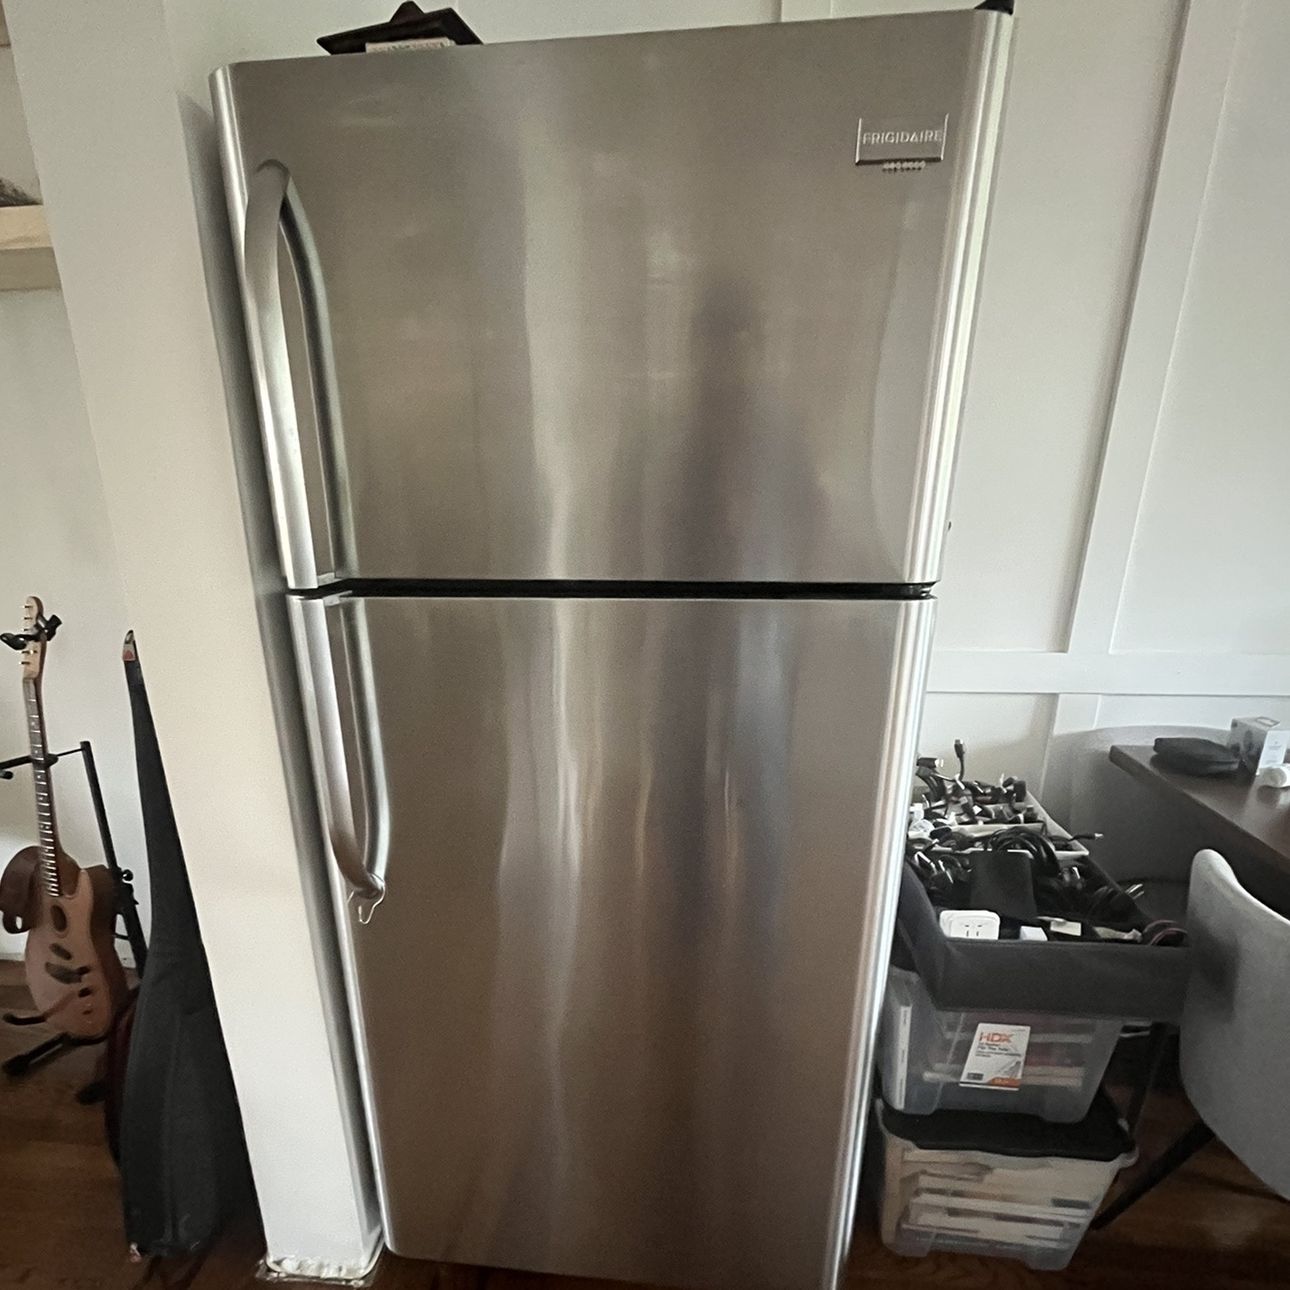 Stainless Steel Top Freezer Refrigerator By Frigidaire